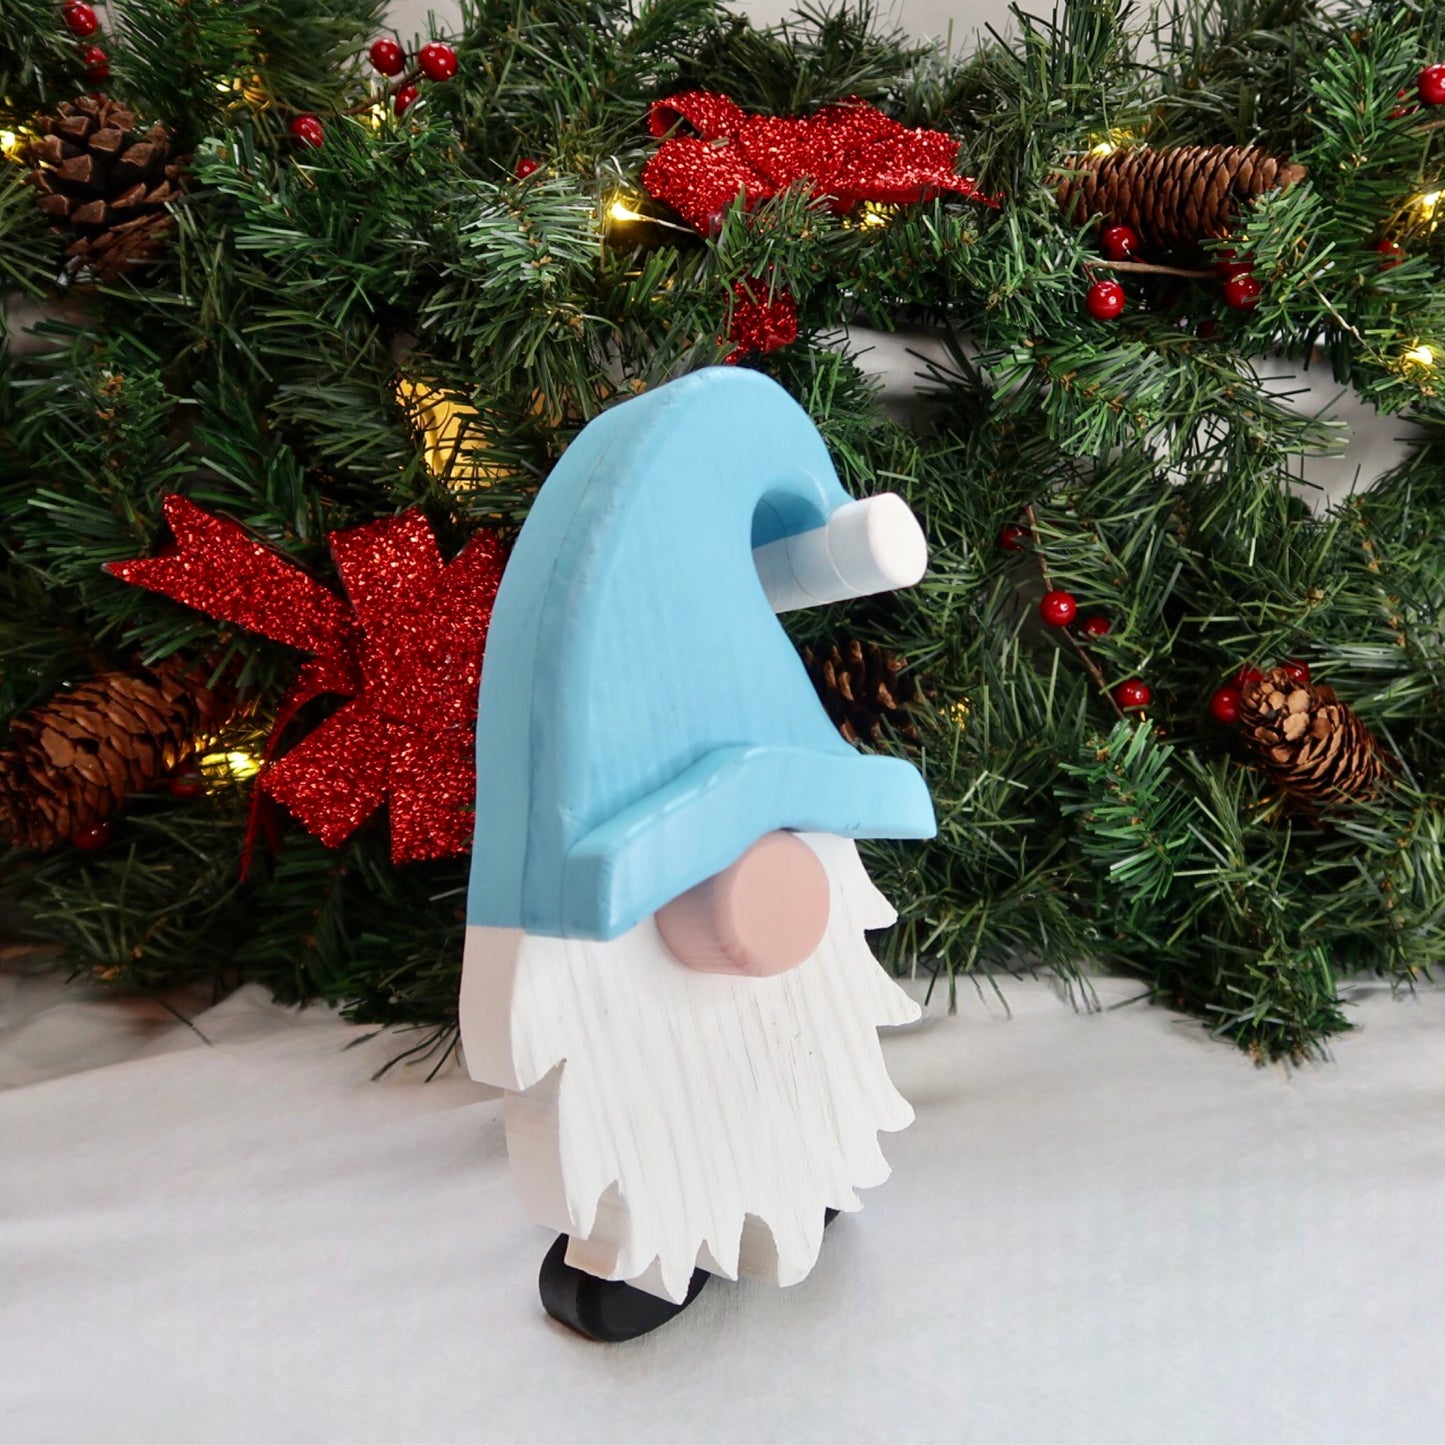 Festive Gonk - Handmade Decorative Wooden Gnome - Sky Blue